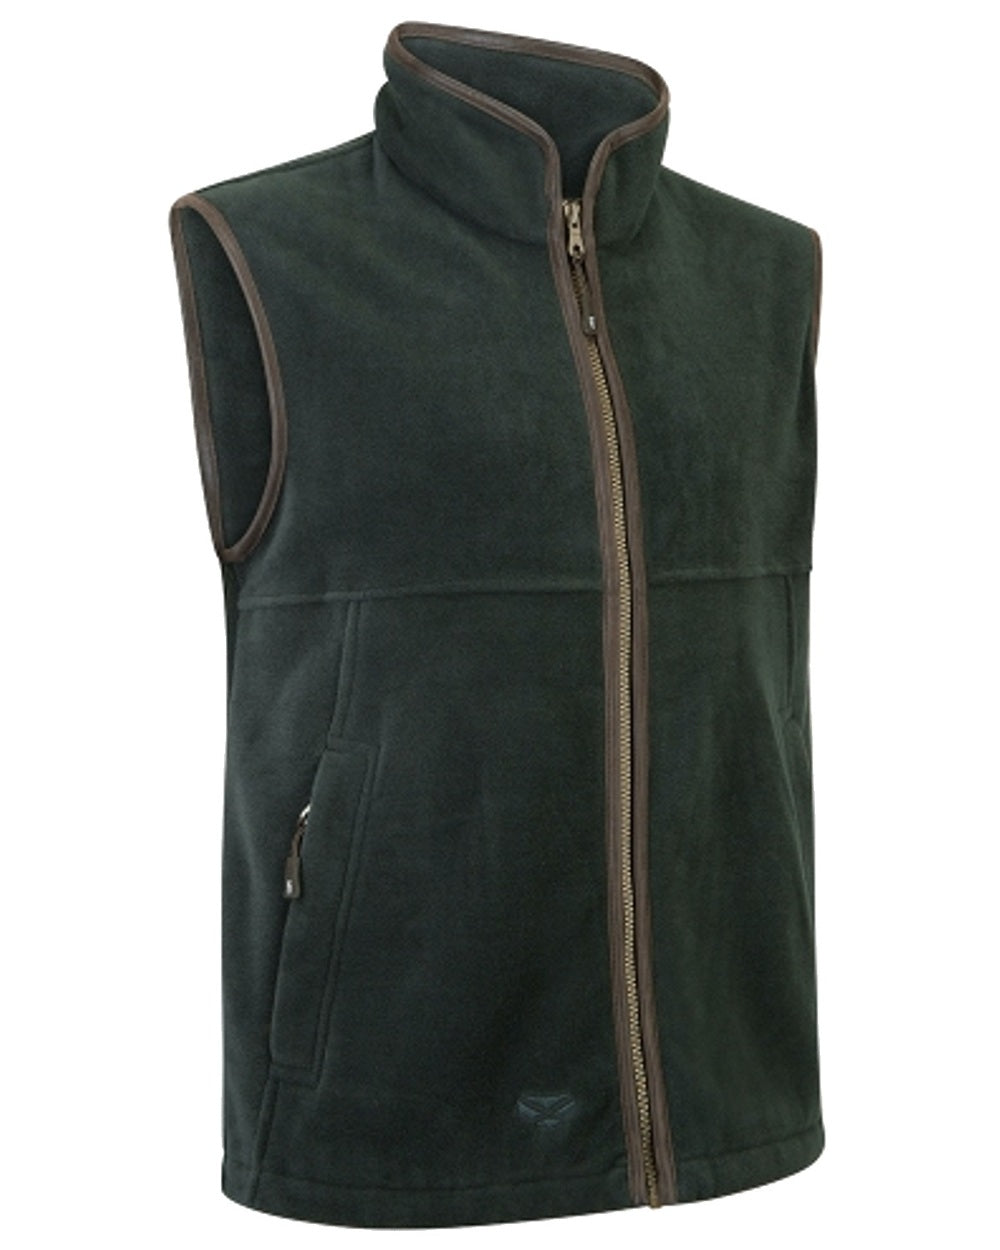 Pine Green coloured Hoggs of Fife Stenton Technical Fleece Gilet on white background 